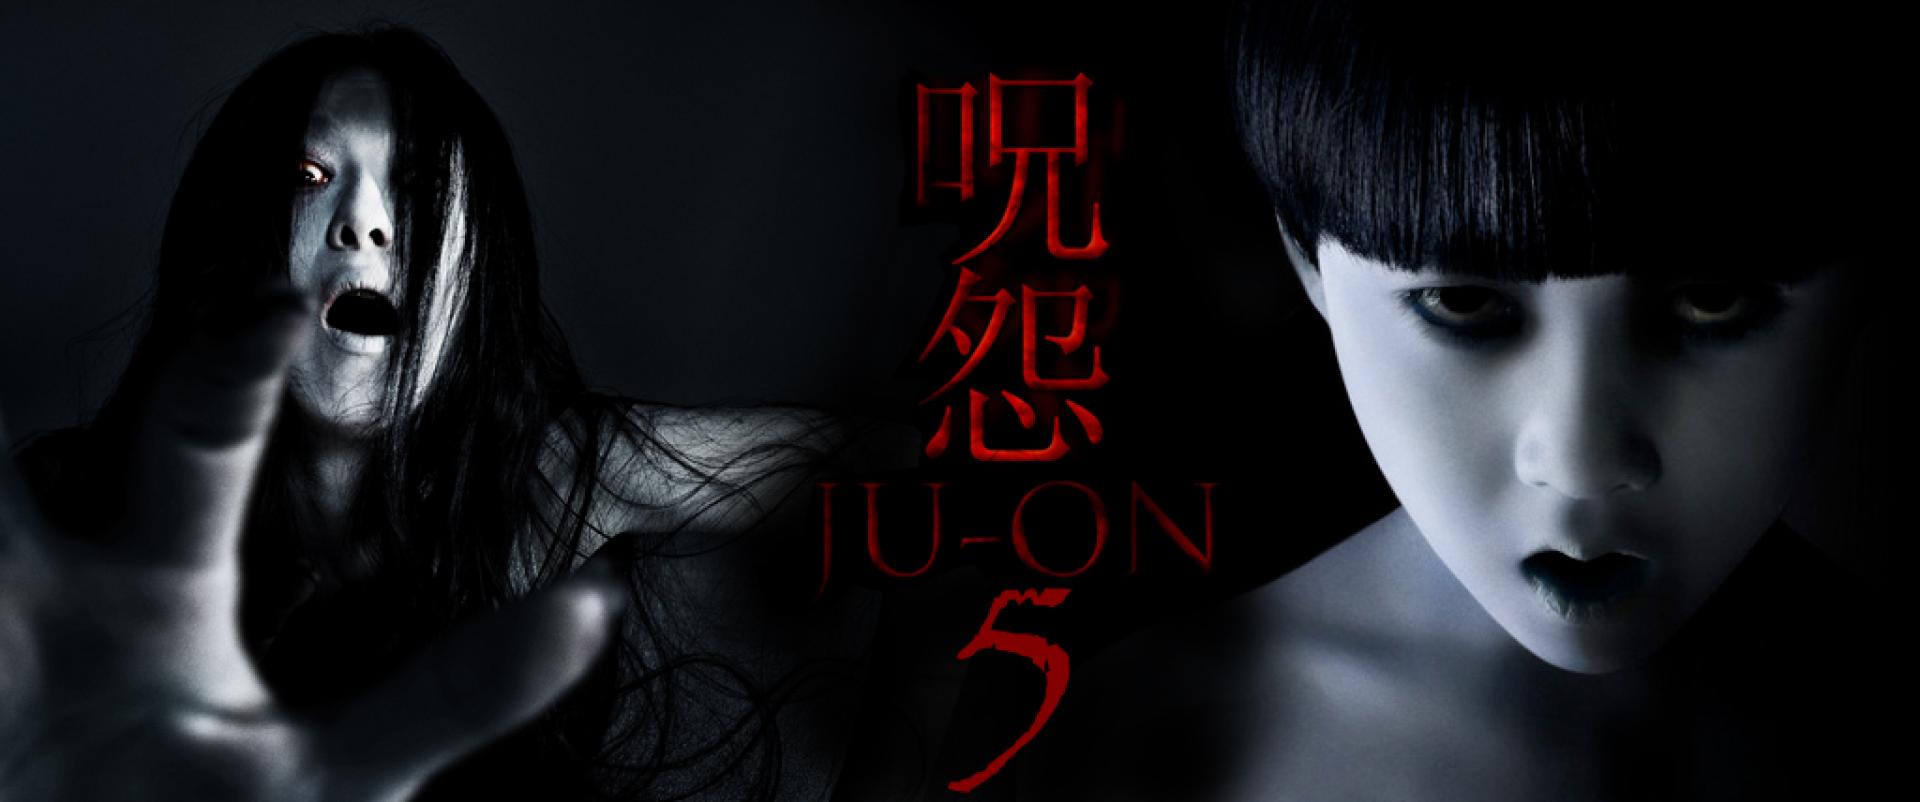 Ju-on Part 5 (2014)